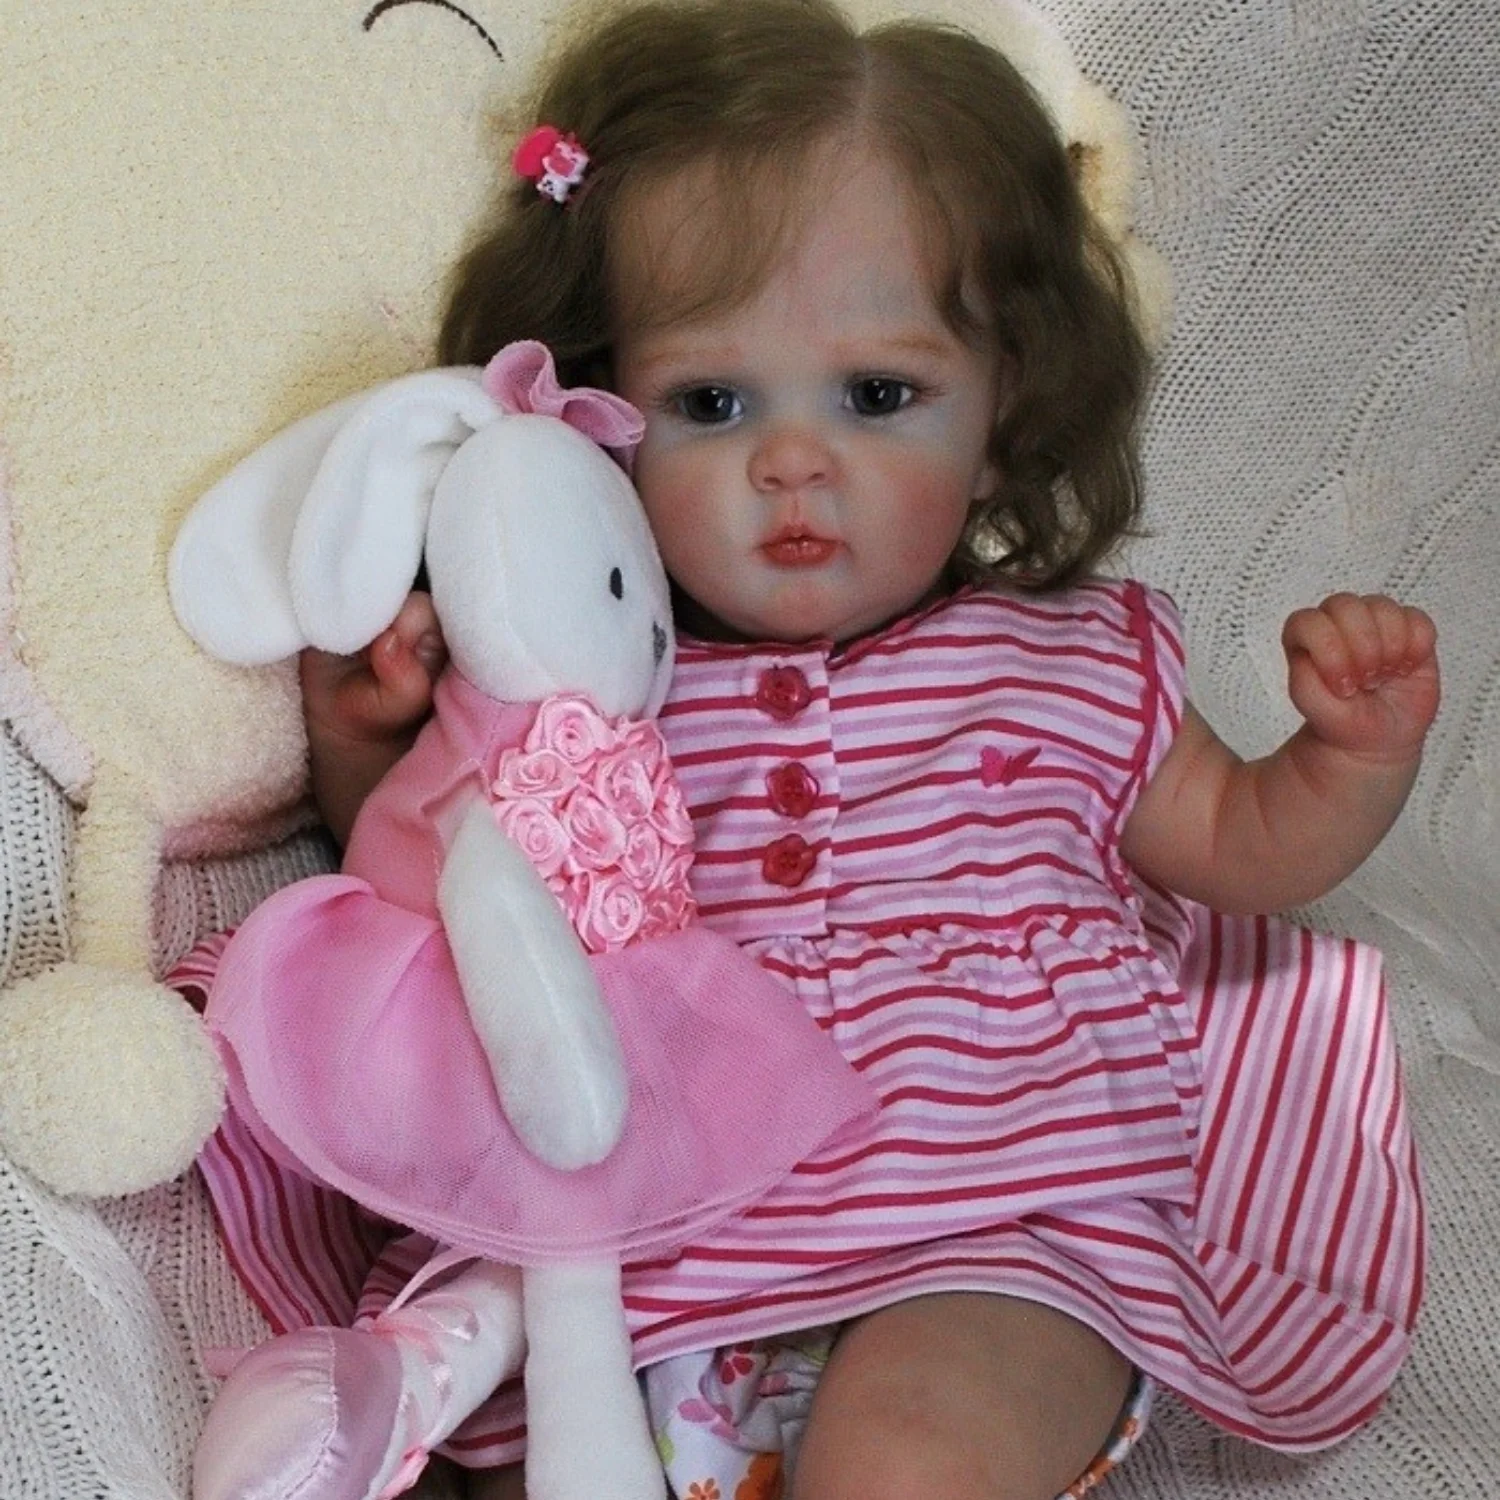 Novi 18-Inčni Spreman Lutka Reborn Baby Doll Jocy 3D S Vidljivim Venama Na Koži Novorođenčeta Sa Priborom Za Lutke, Igračke ručni Rad, Dar Za Djevojčice